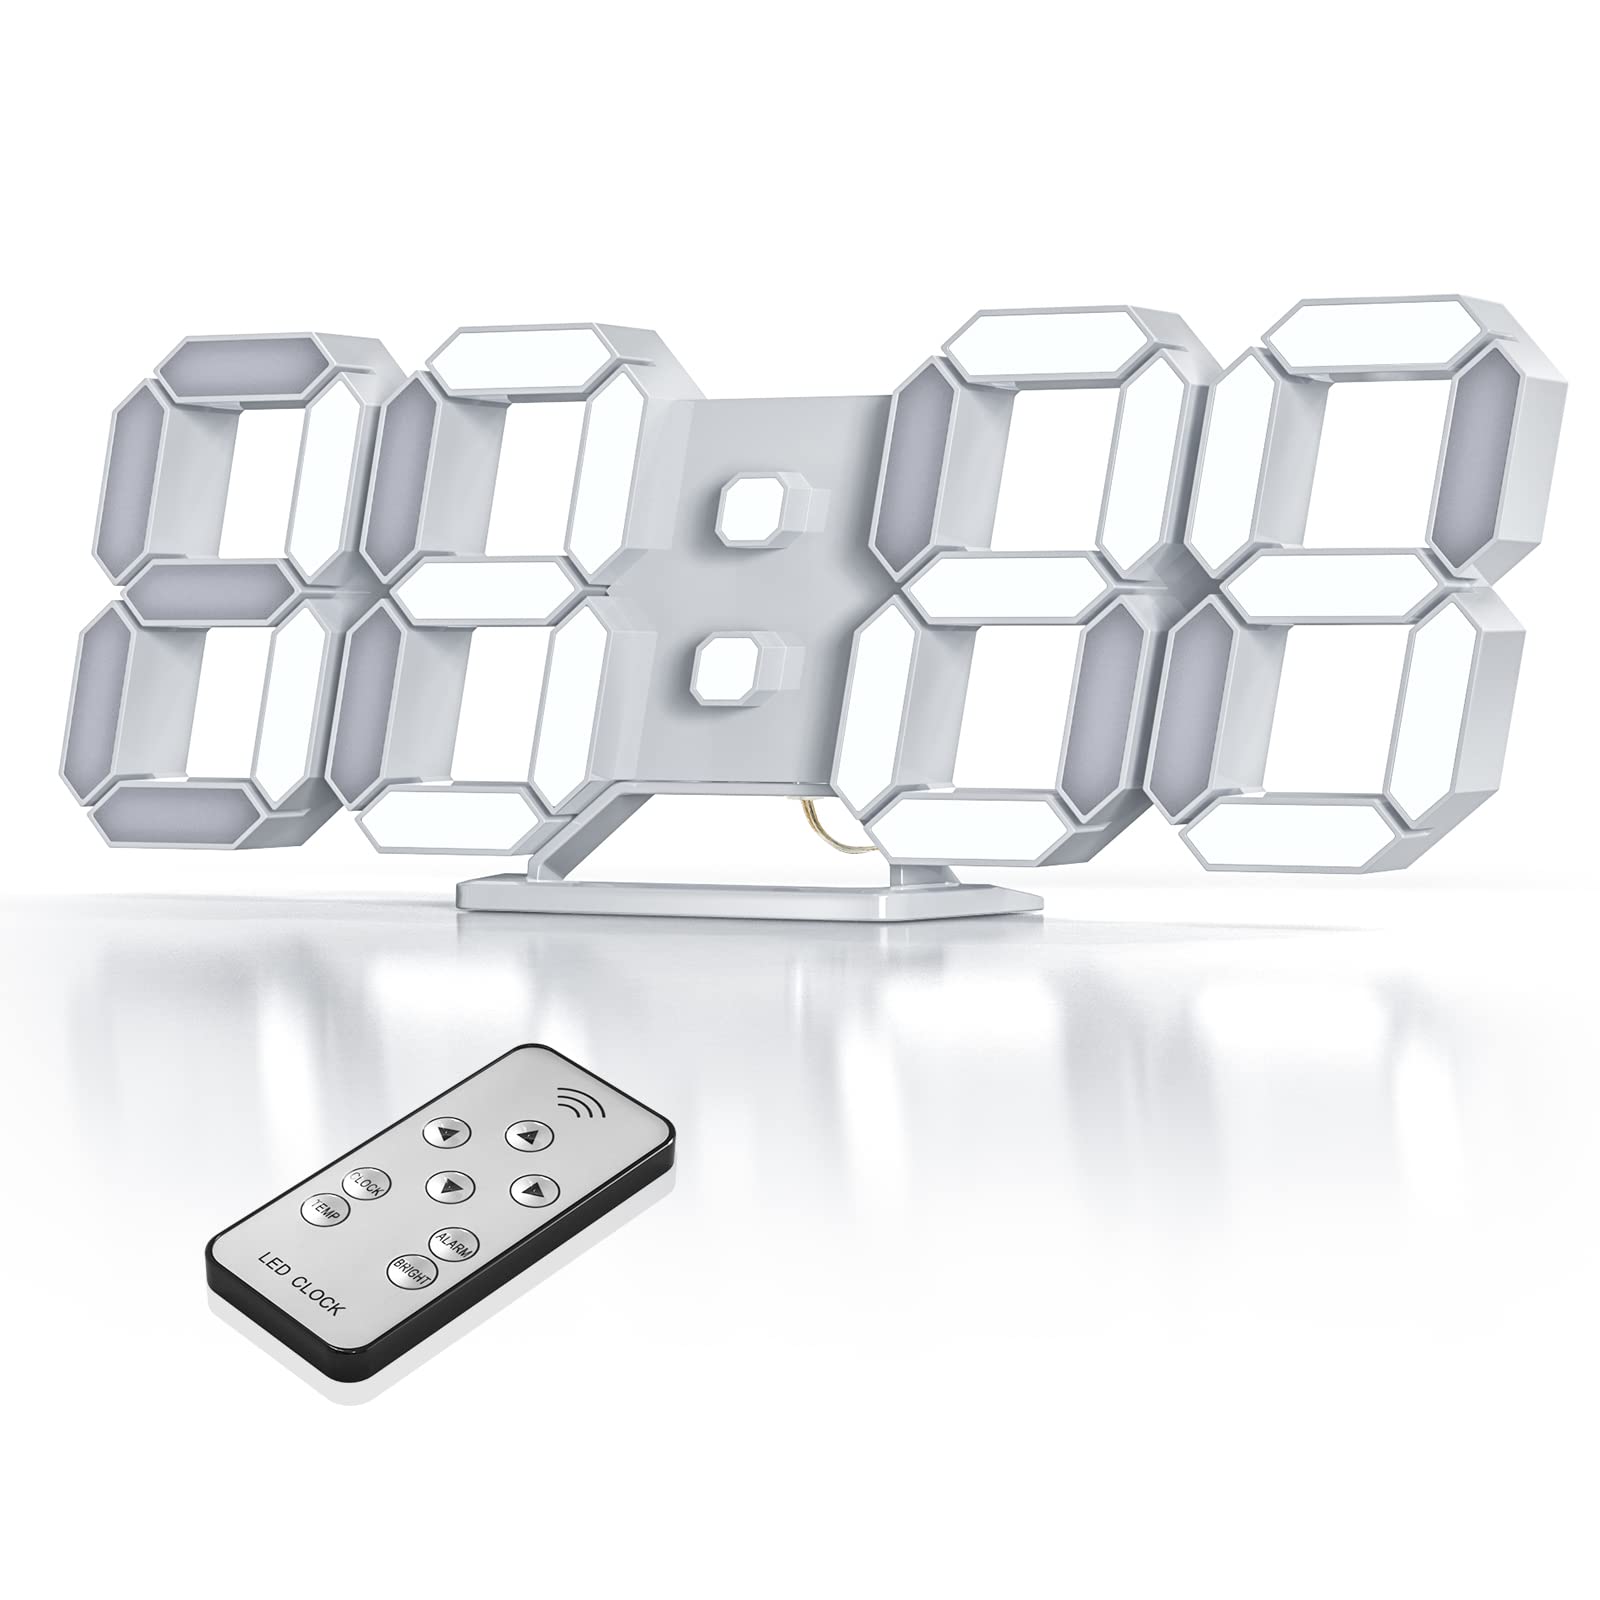 EDUPLINK 3D LEDデジタル時計 9.7イン リモコン付き、明るさ調整 目覚まし時計 壁掛け時計年/月/日の温度表示、ナイトランプ寝室、キッチン、居間などに適しています。